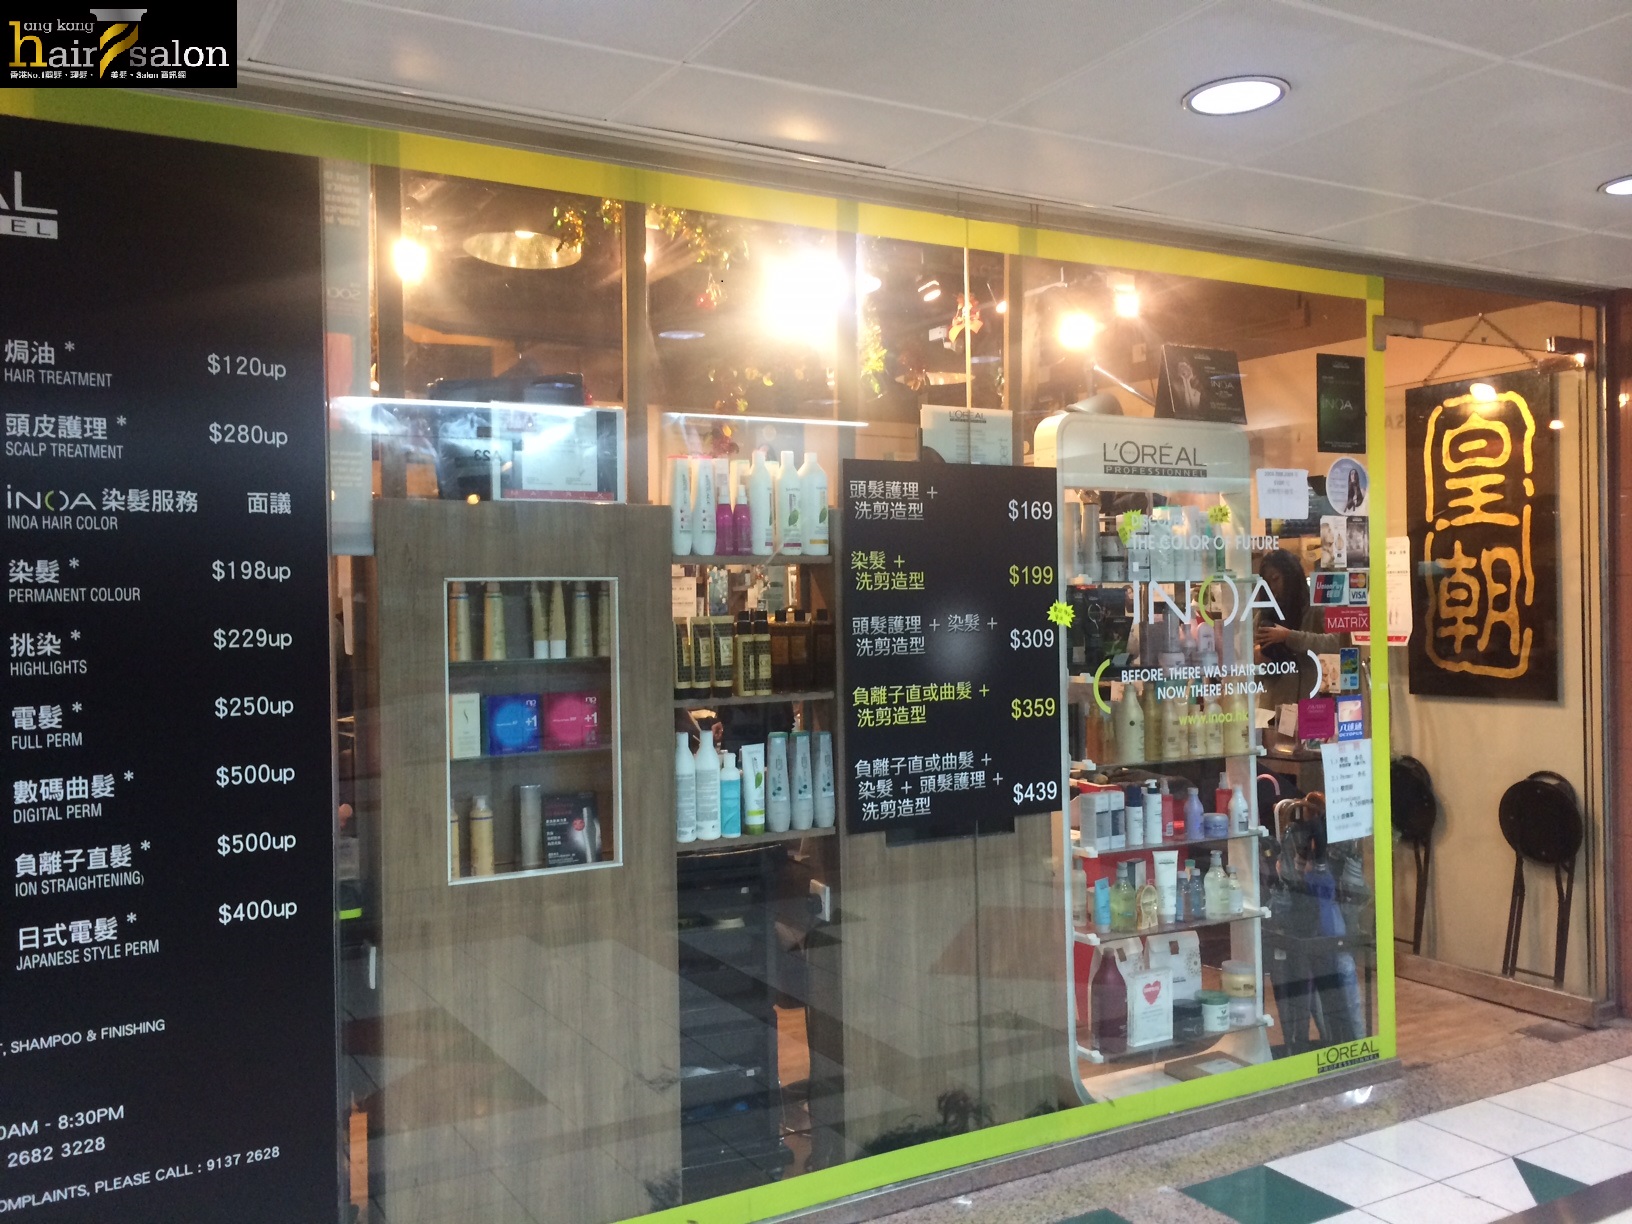 Hair Salon Group 皇朝 Dynasty Professional Salon (花都廣場)  @ HK Hair Salon